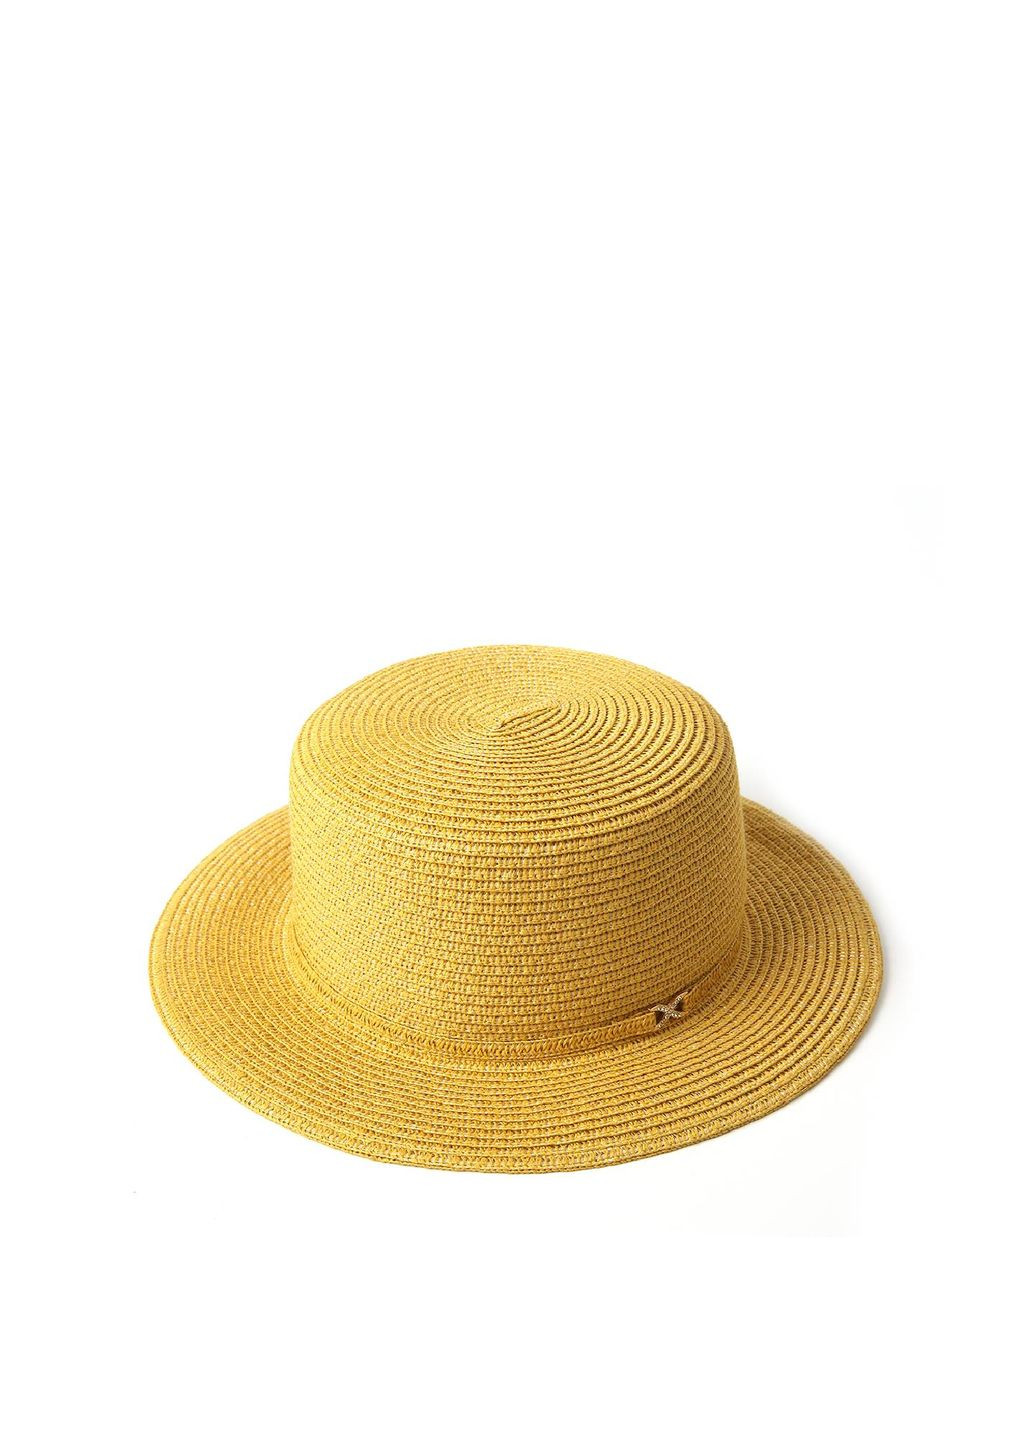 Шляпа канотье женская бумага желтая VIVIAN LuckyLOOK 817-839 (289478295)